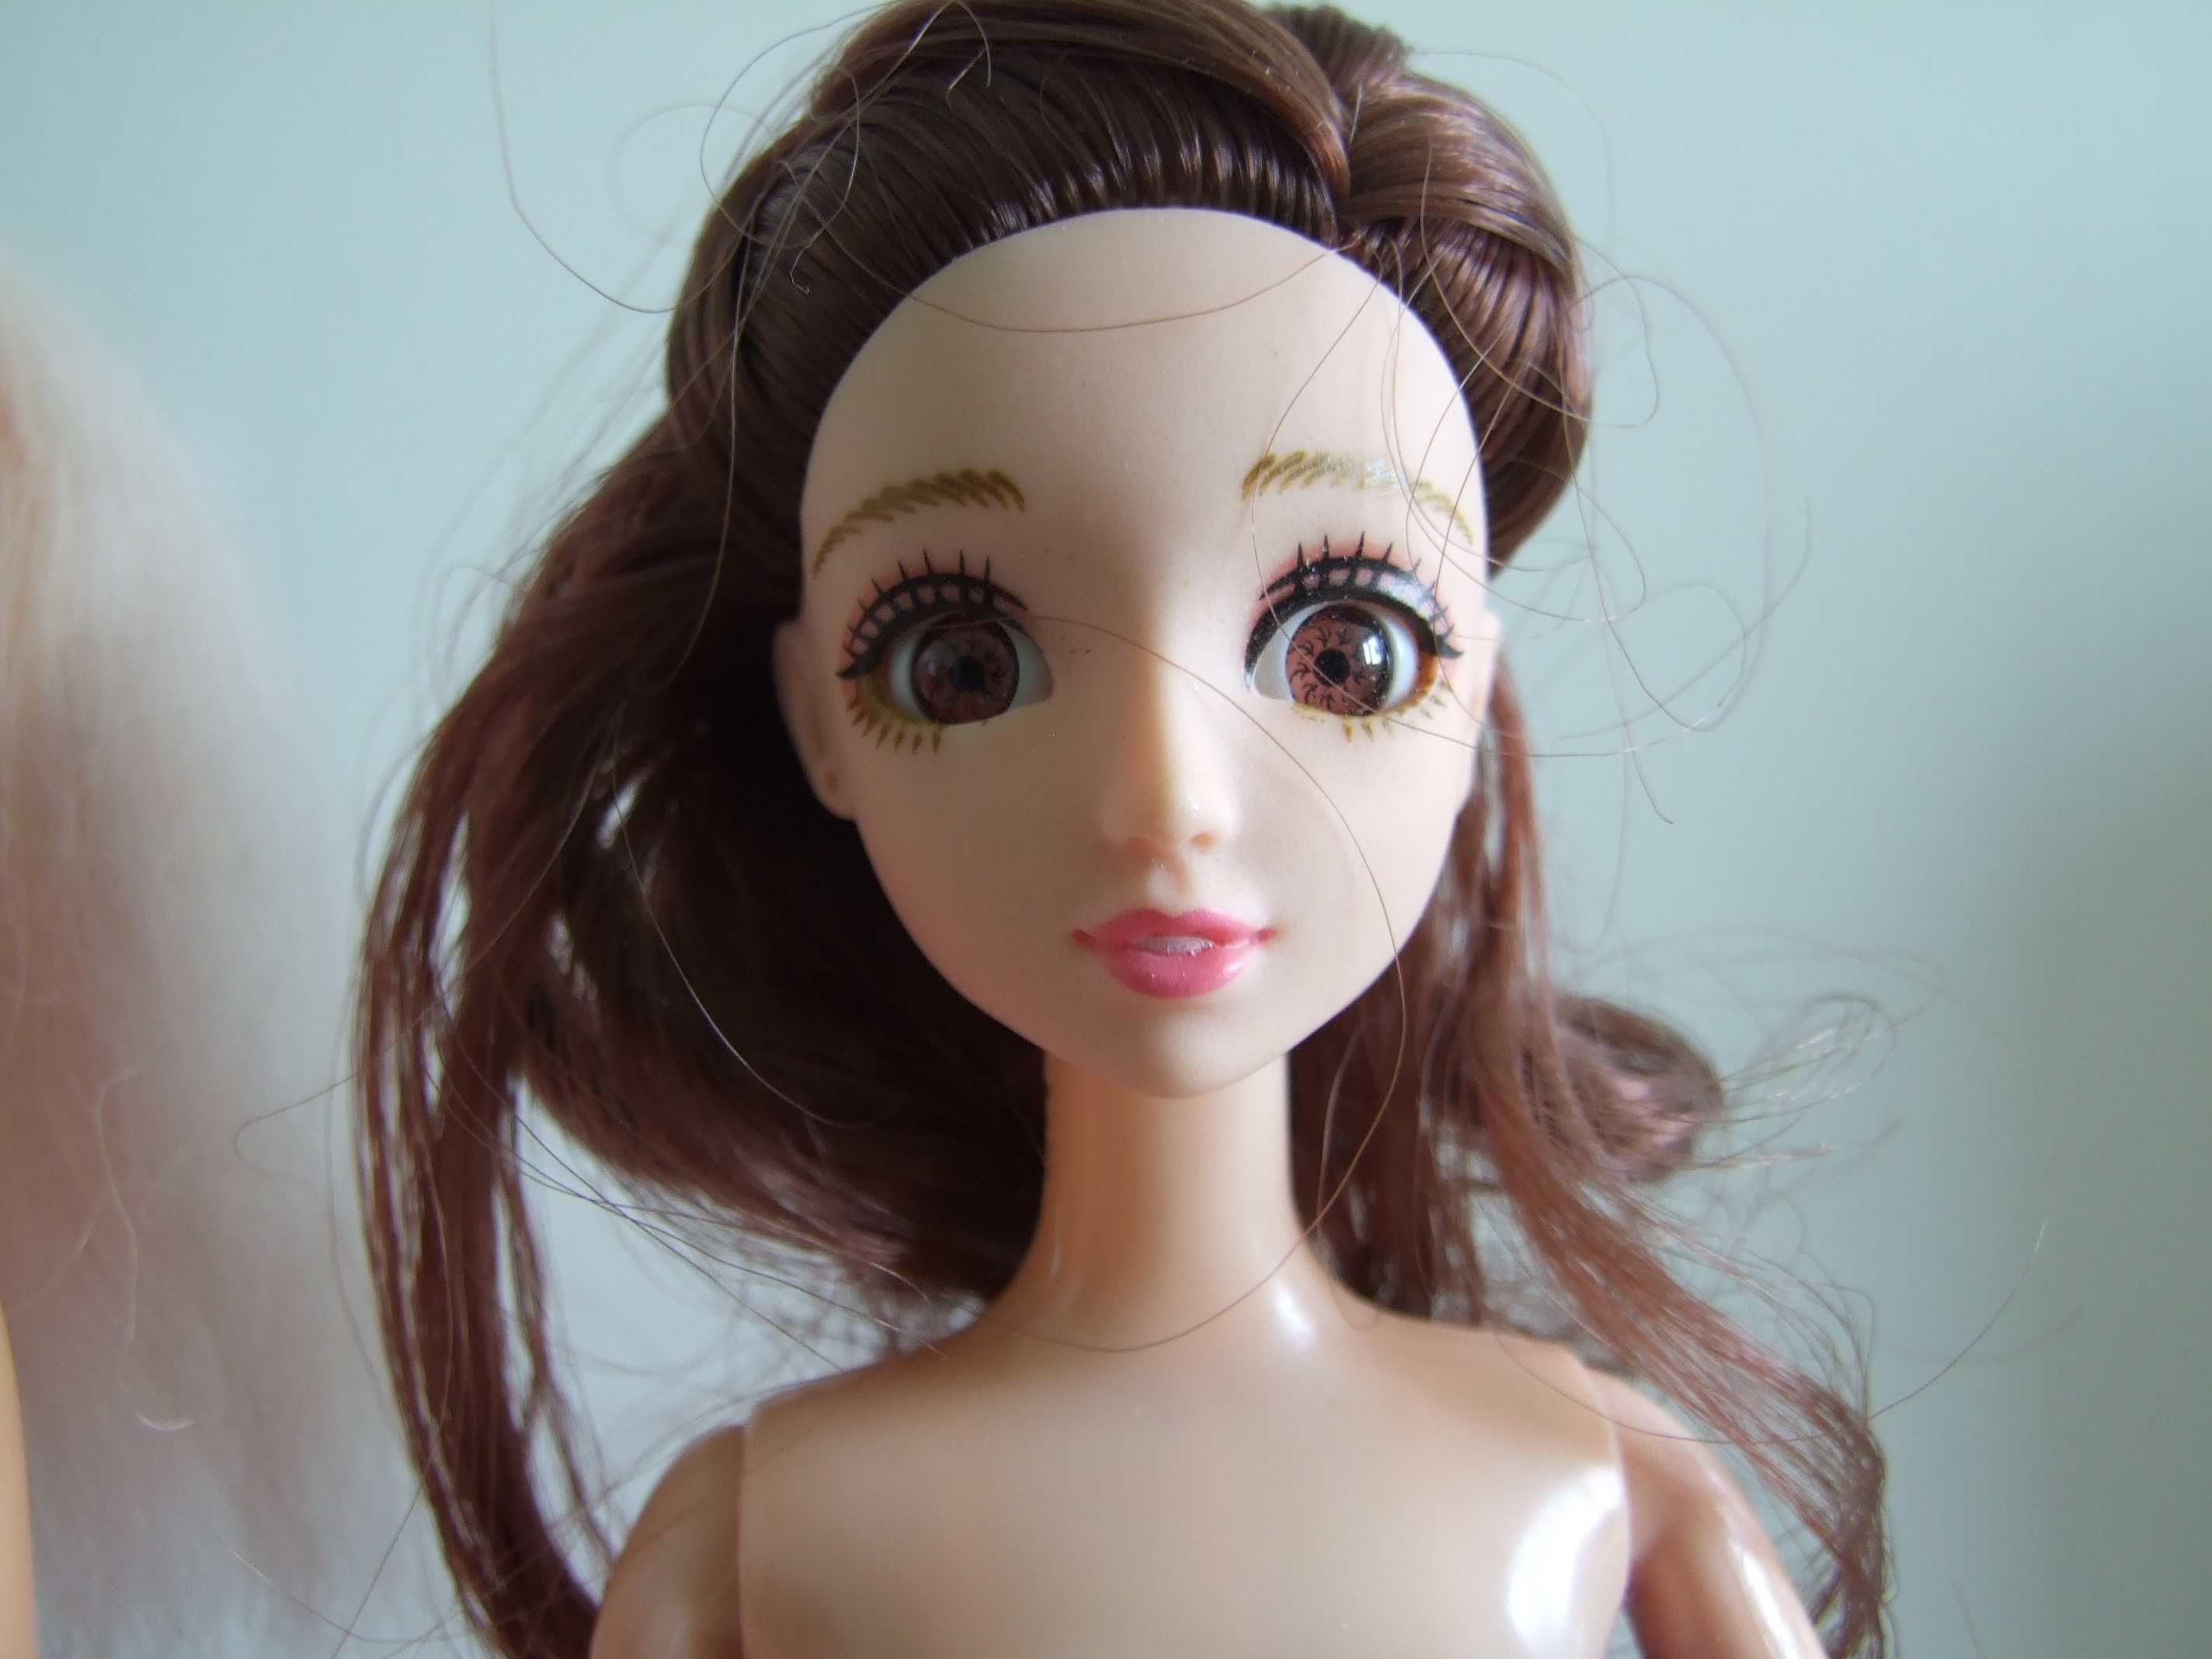 zestaw lalek typu Barbie 4 sztuki